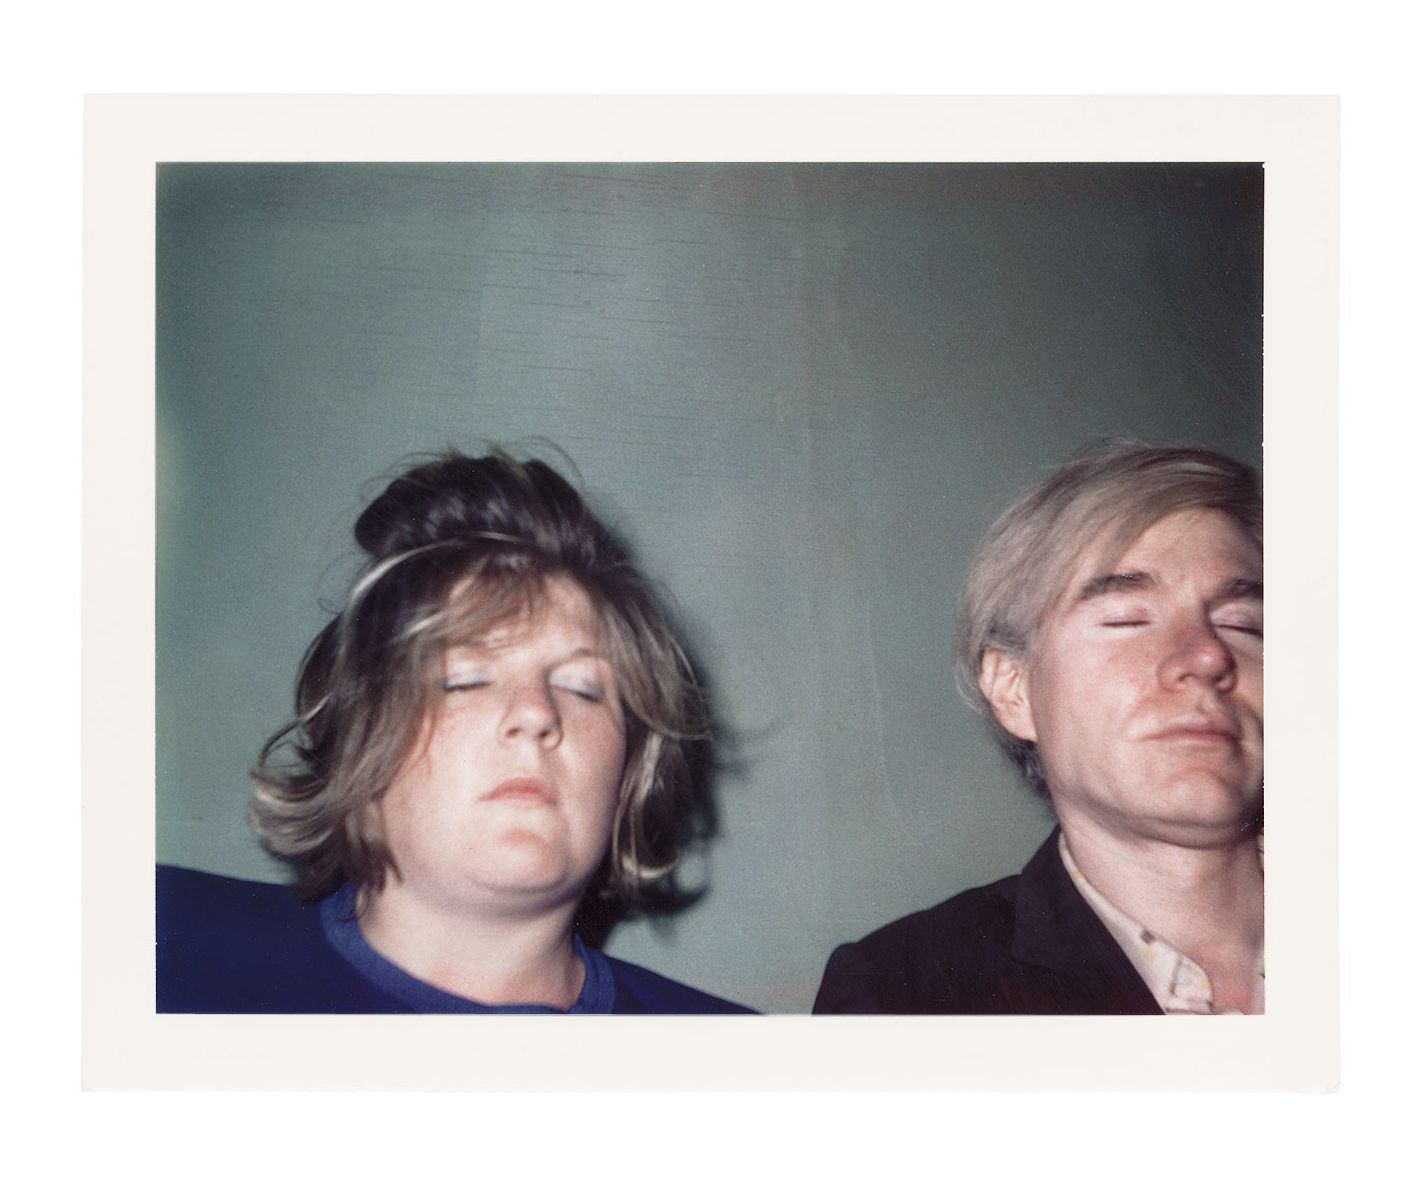 Brigid Berlin's Party Photos of Andy Warhol’s Factory Days